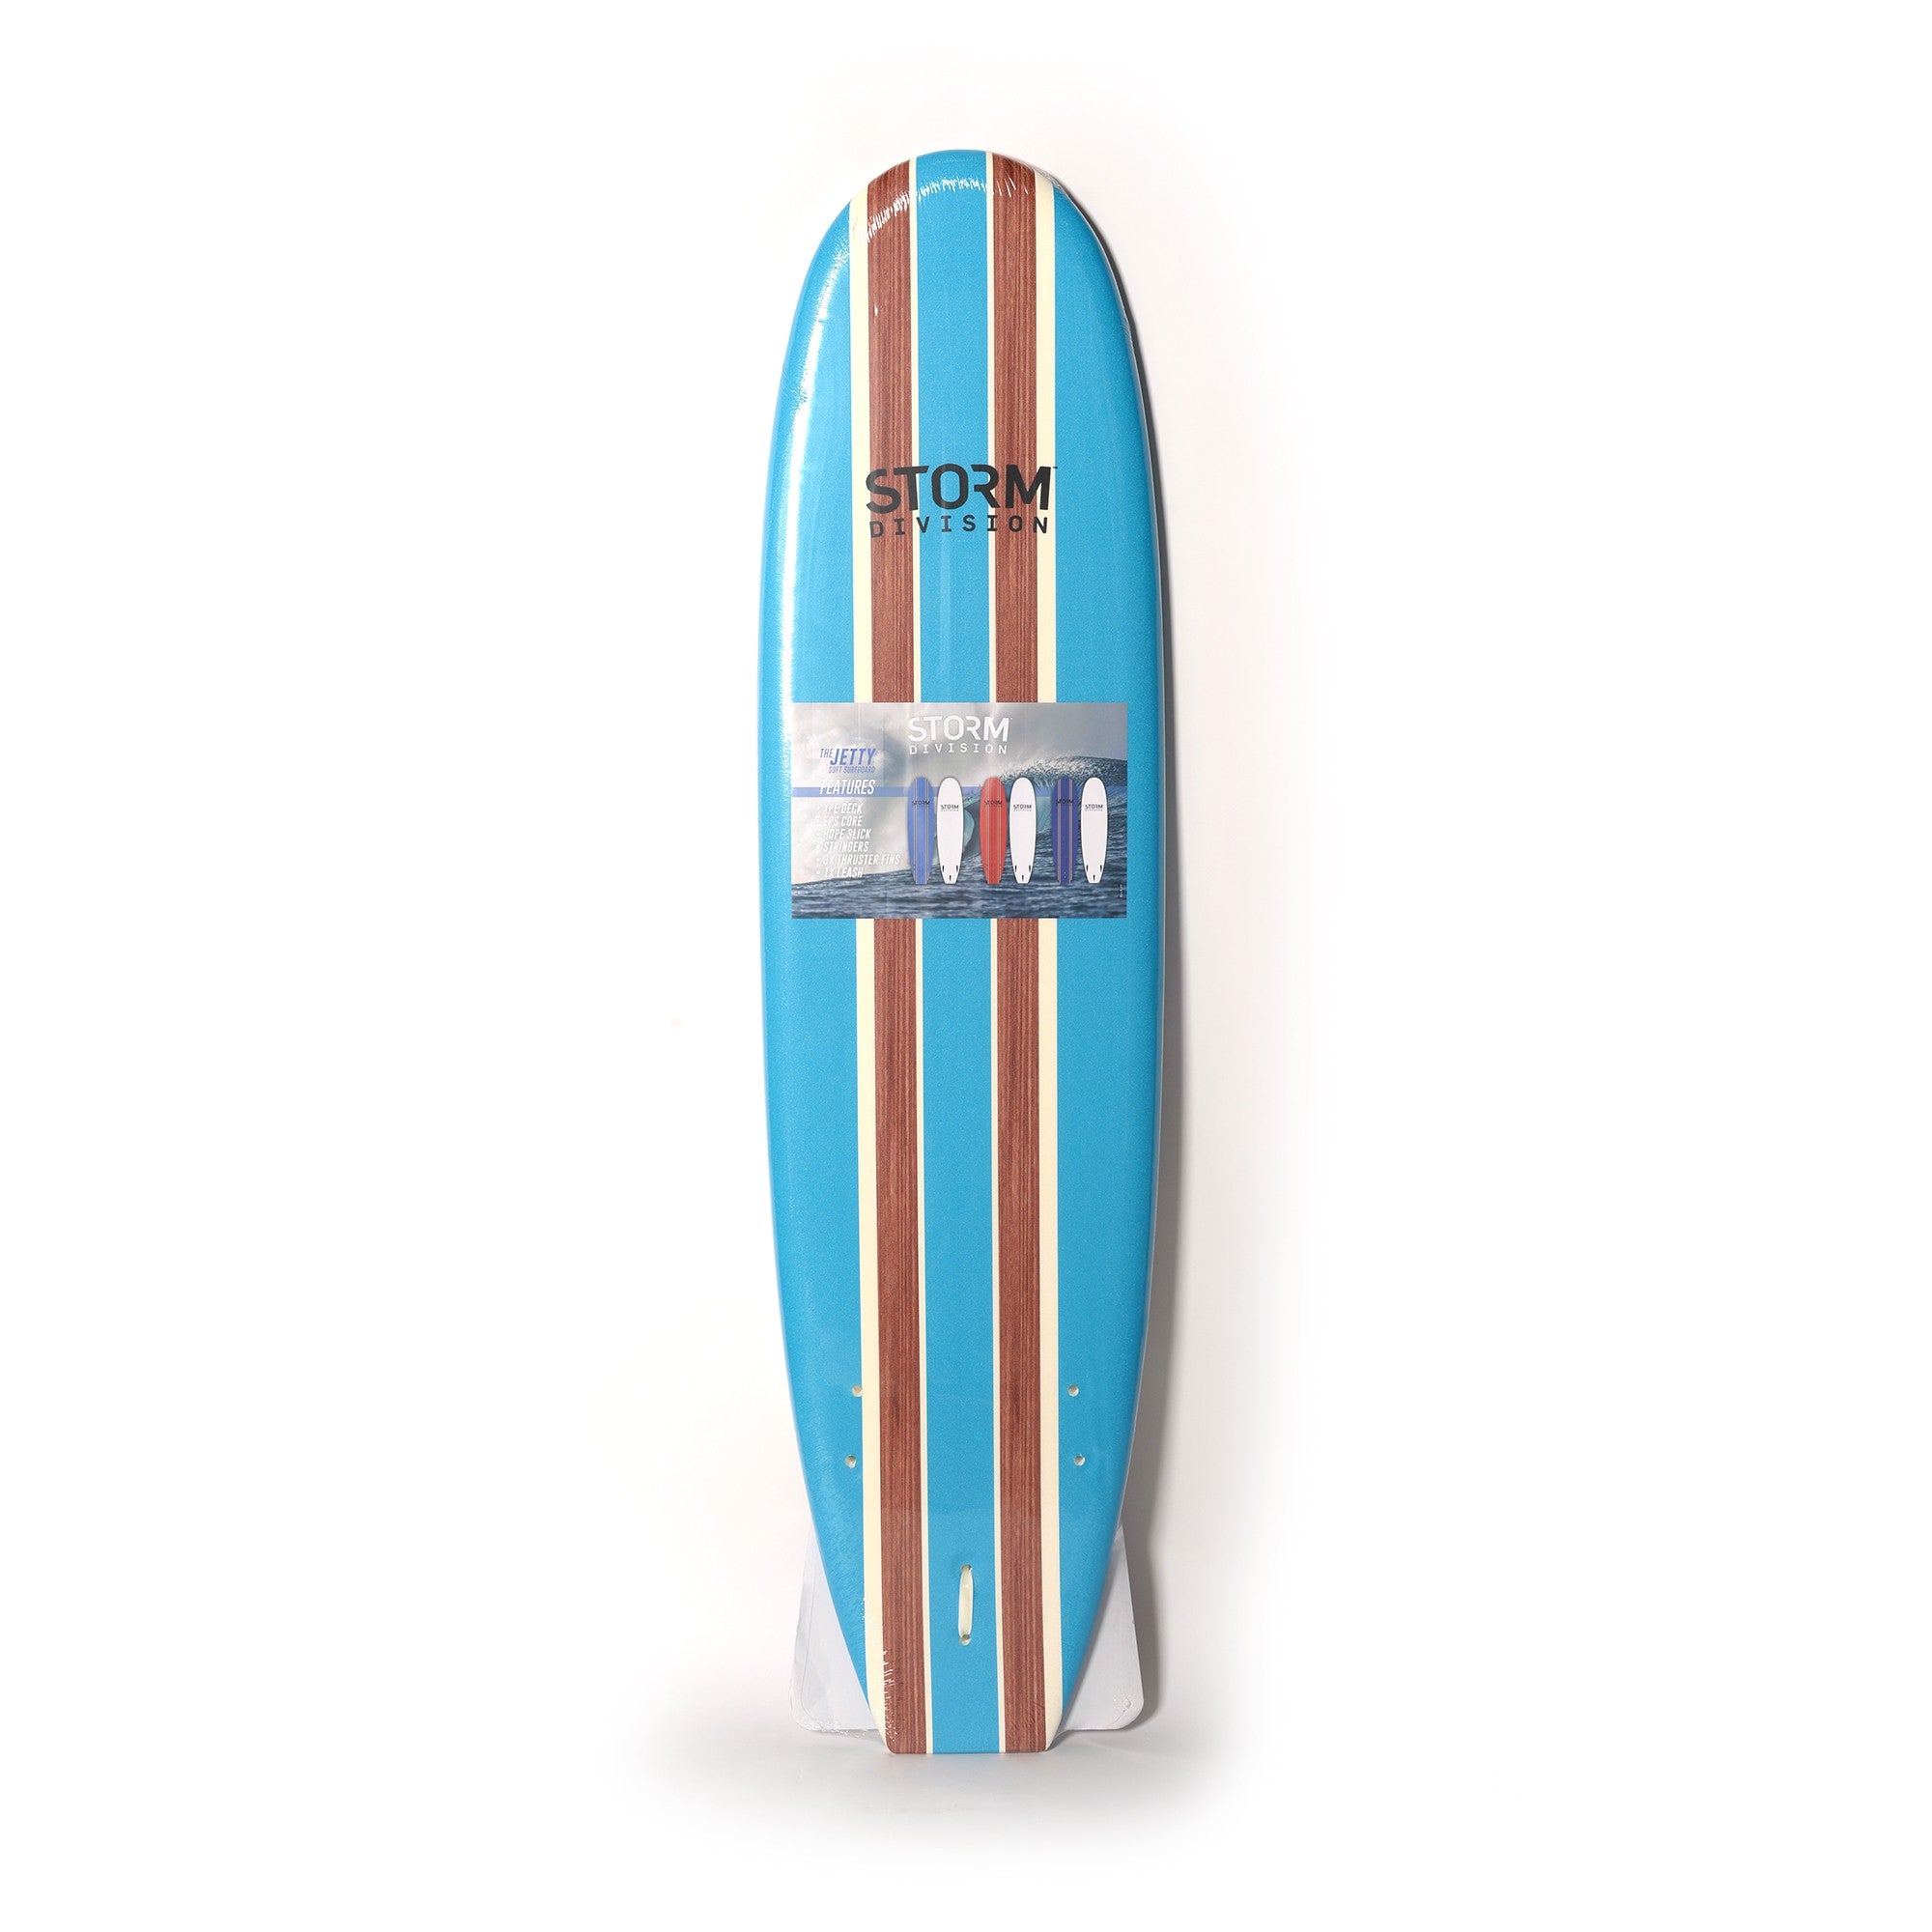 STORM DIVISION - Jetty Softboard - Tabla de surf de espuma - 8'0 - Azul